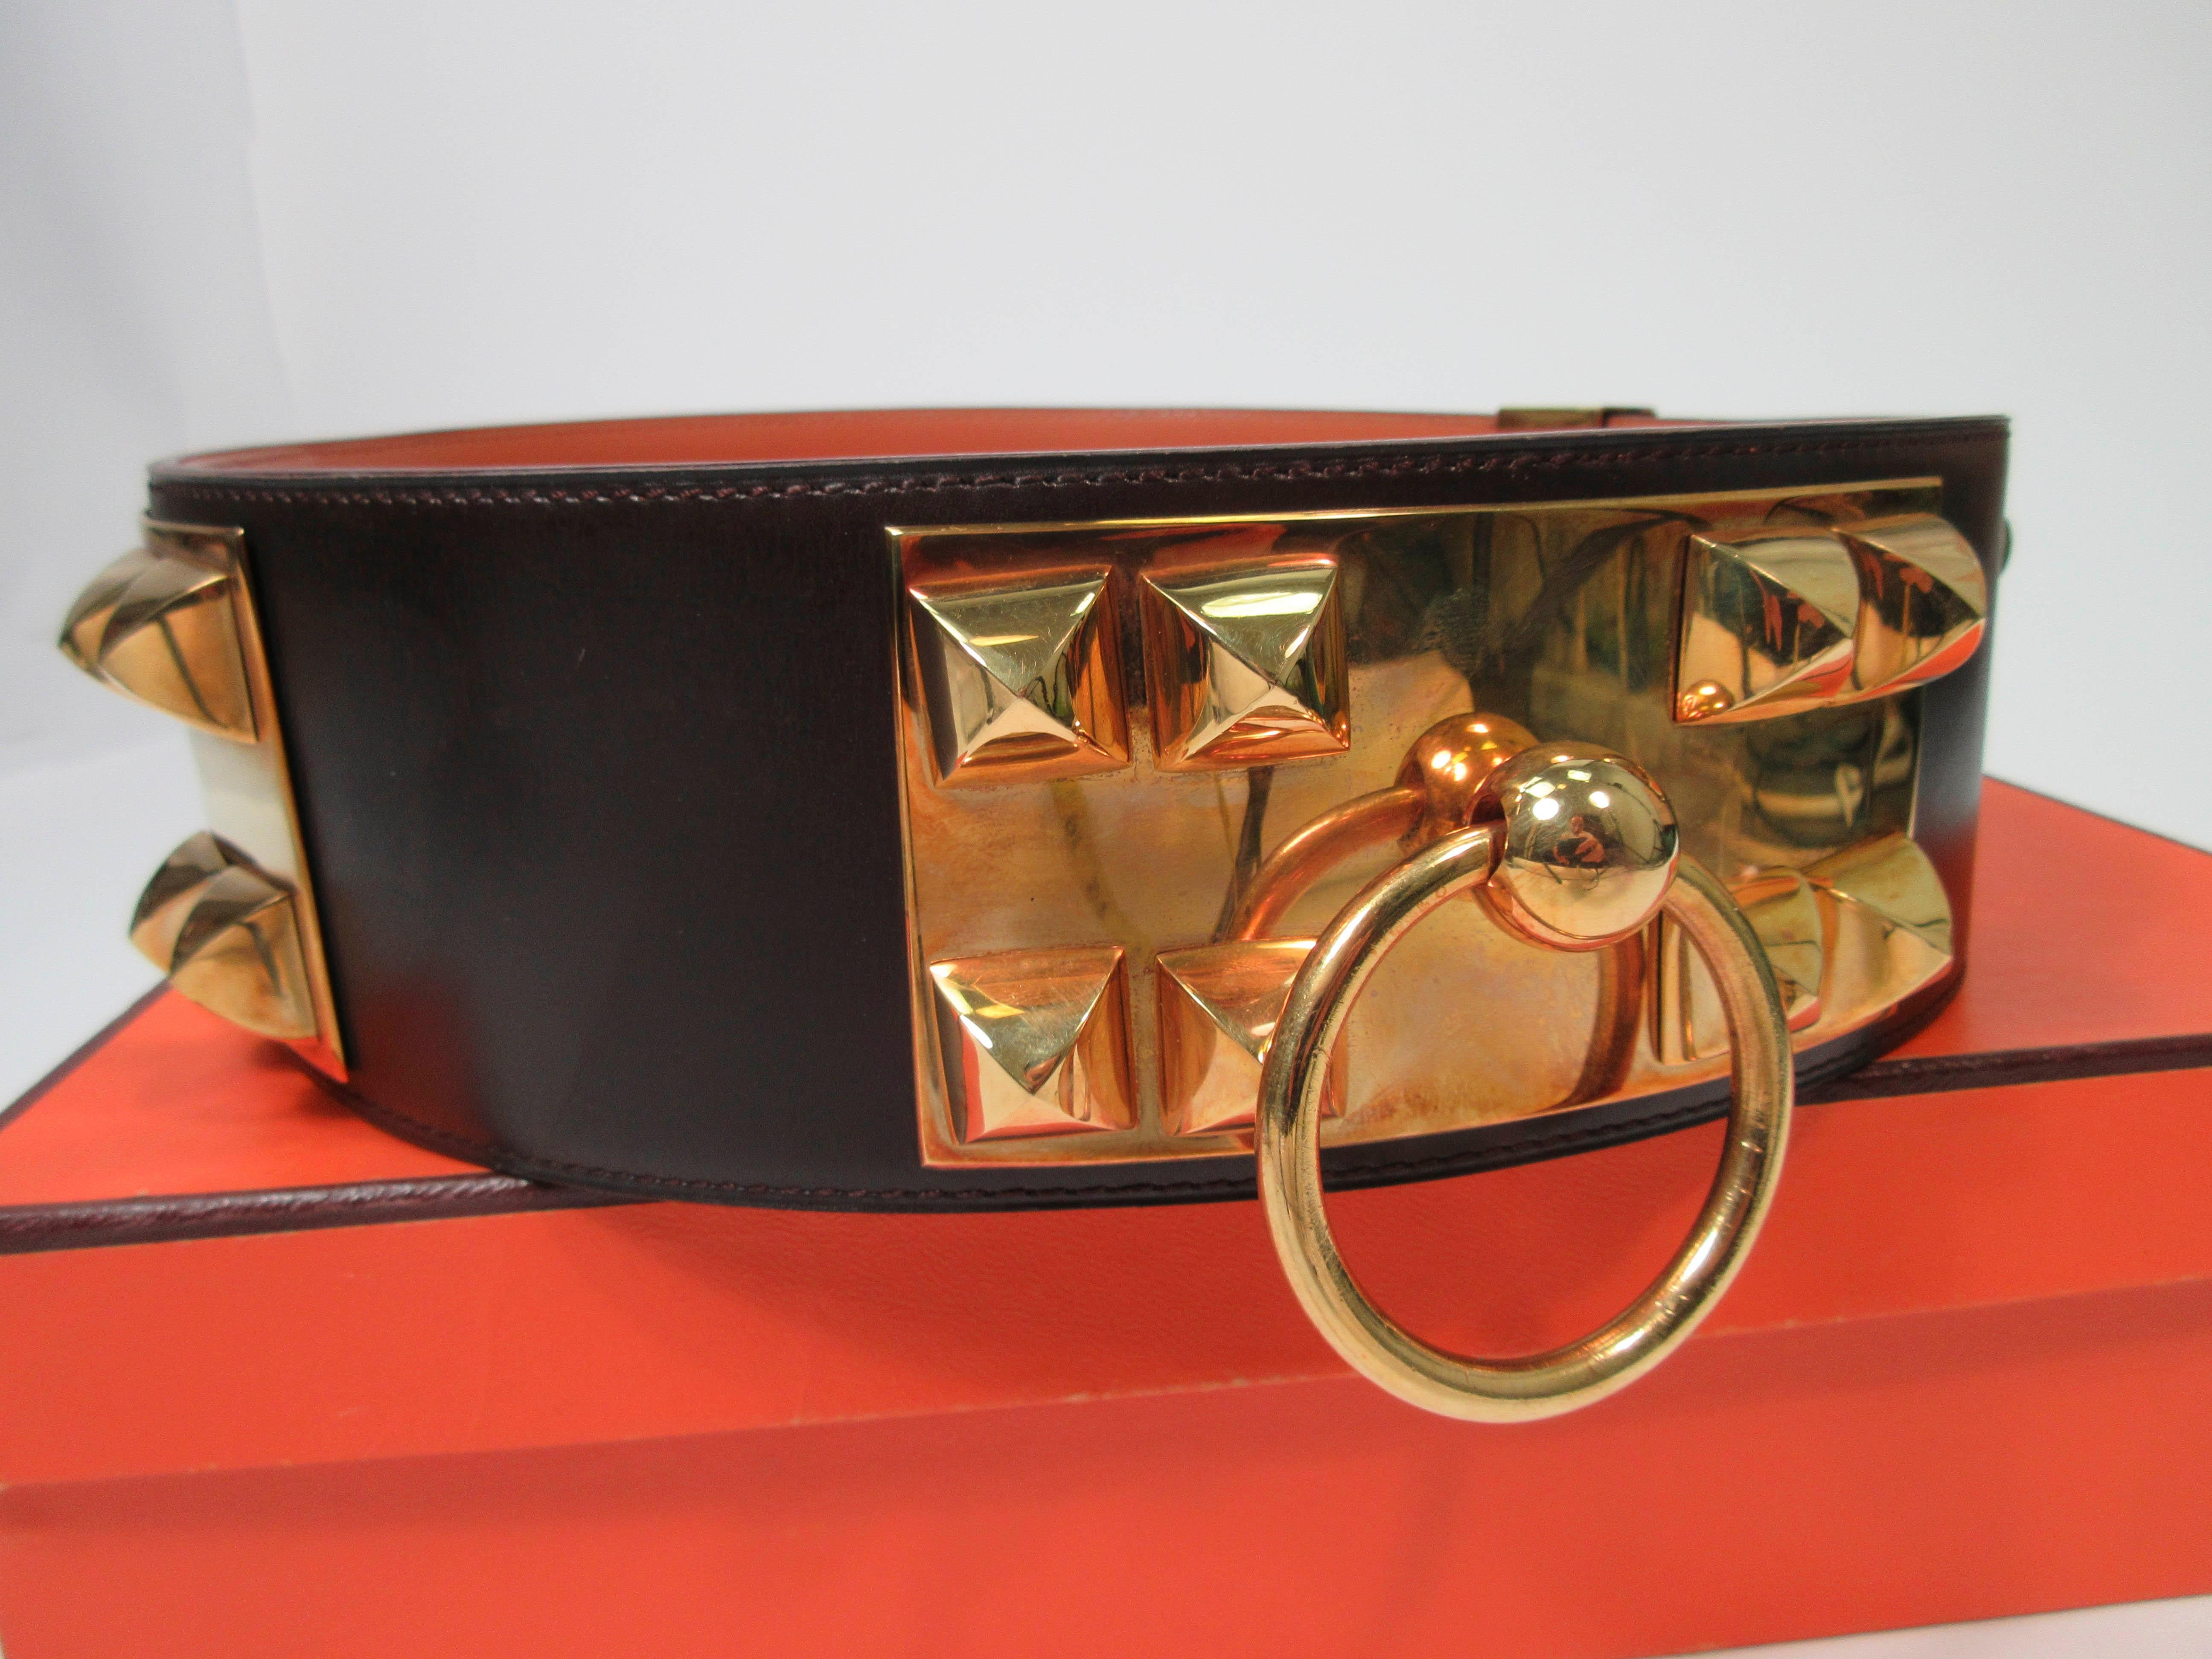 HERMES Collier De Chien Vintage Brown Leather Belt with Gold Hardware Size Large 6